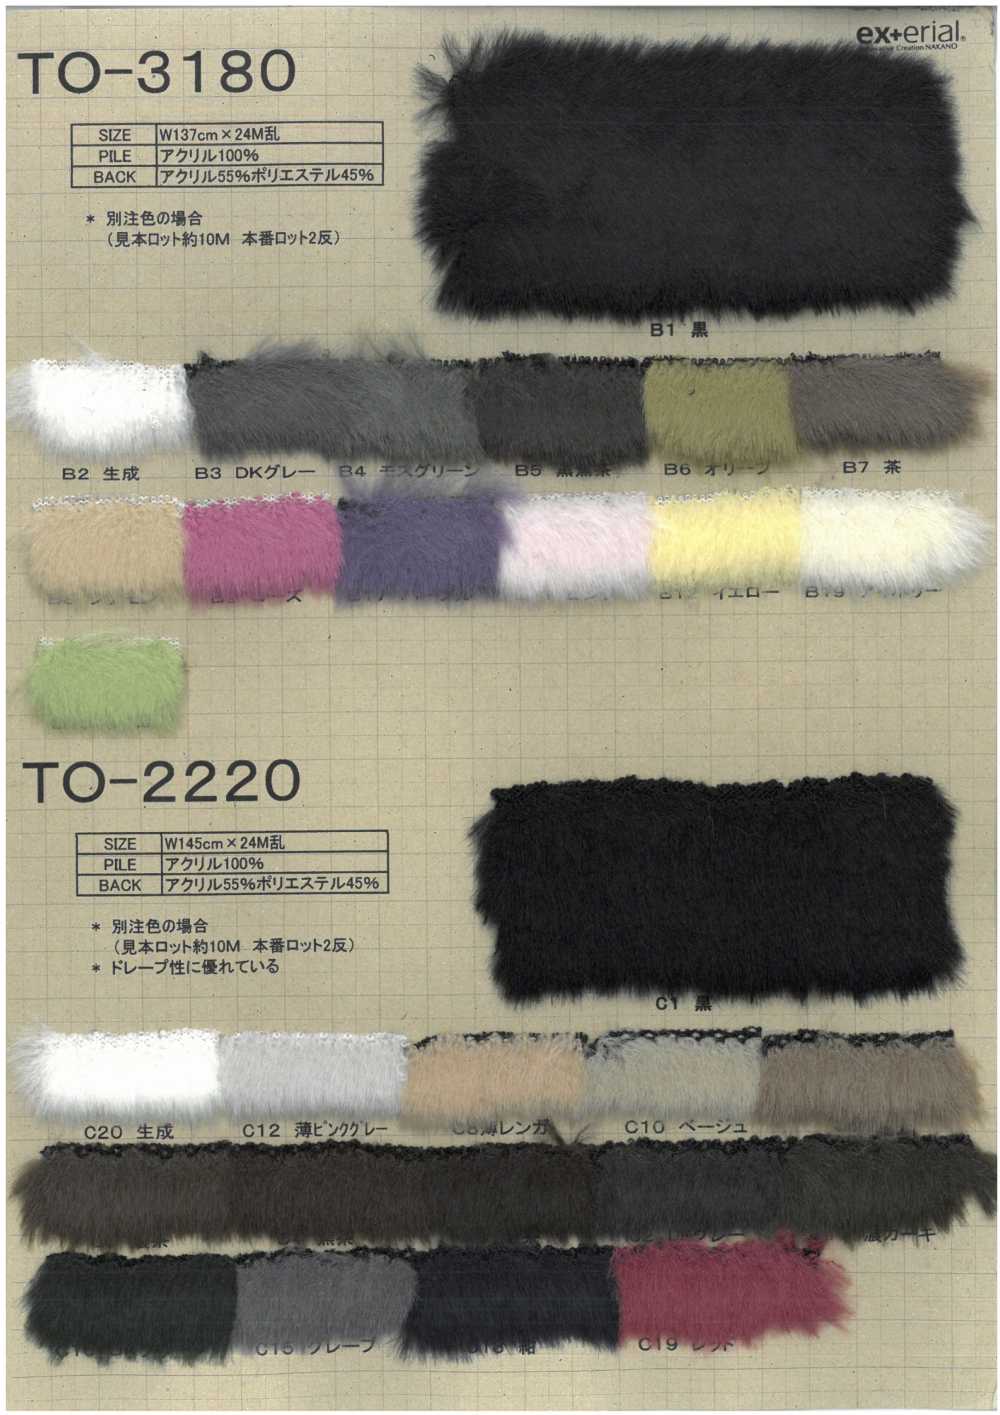 TO-3180 Fourrure Artisanale [Mouton][Fabrication De Textile] Industrie Du Jersey Nakano